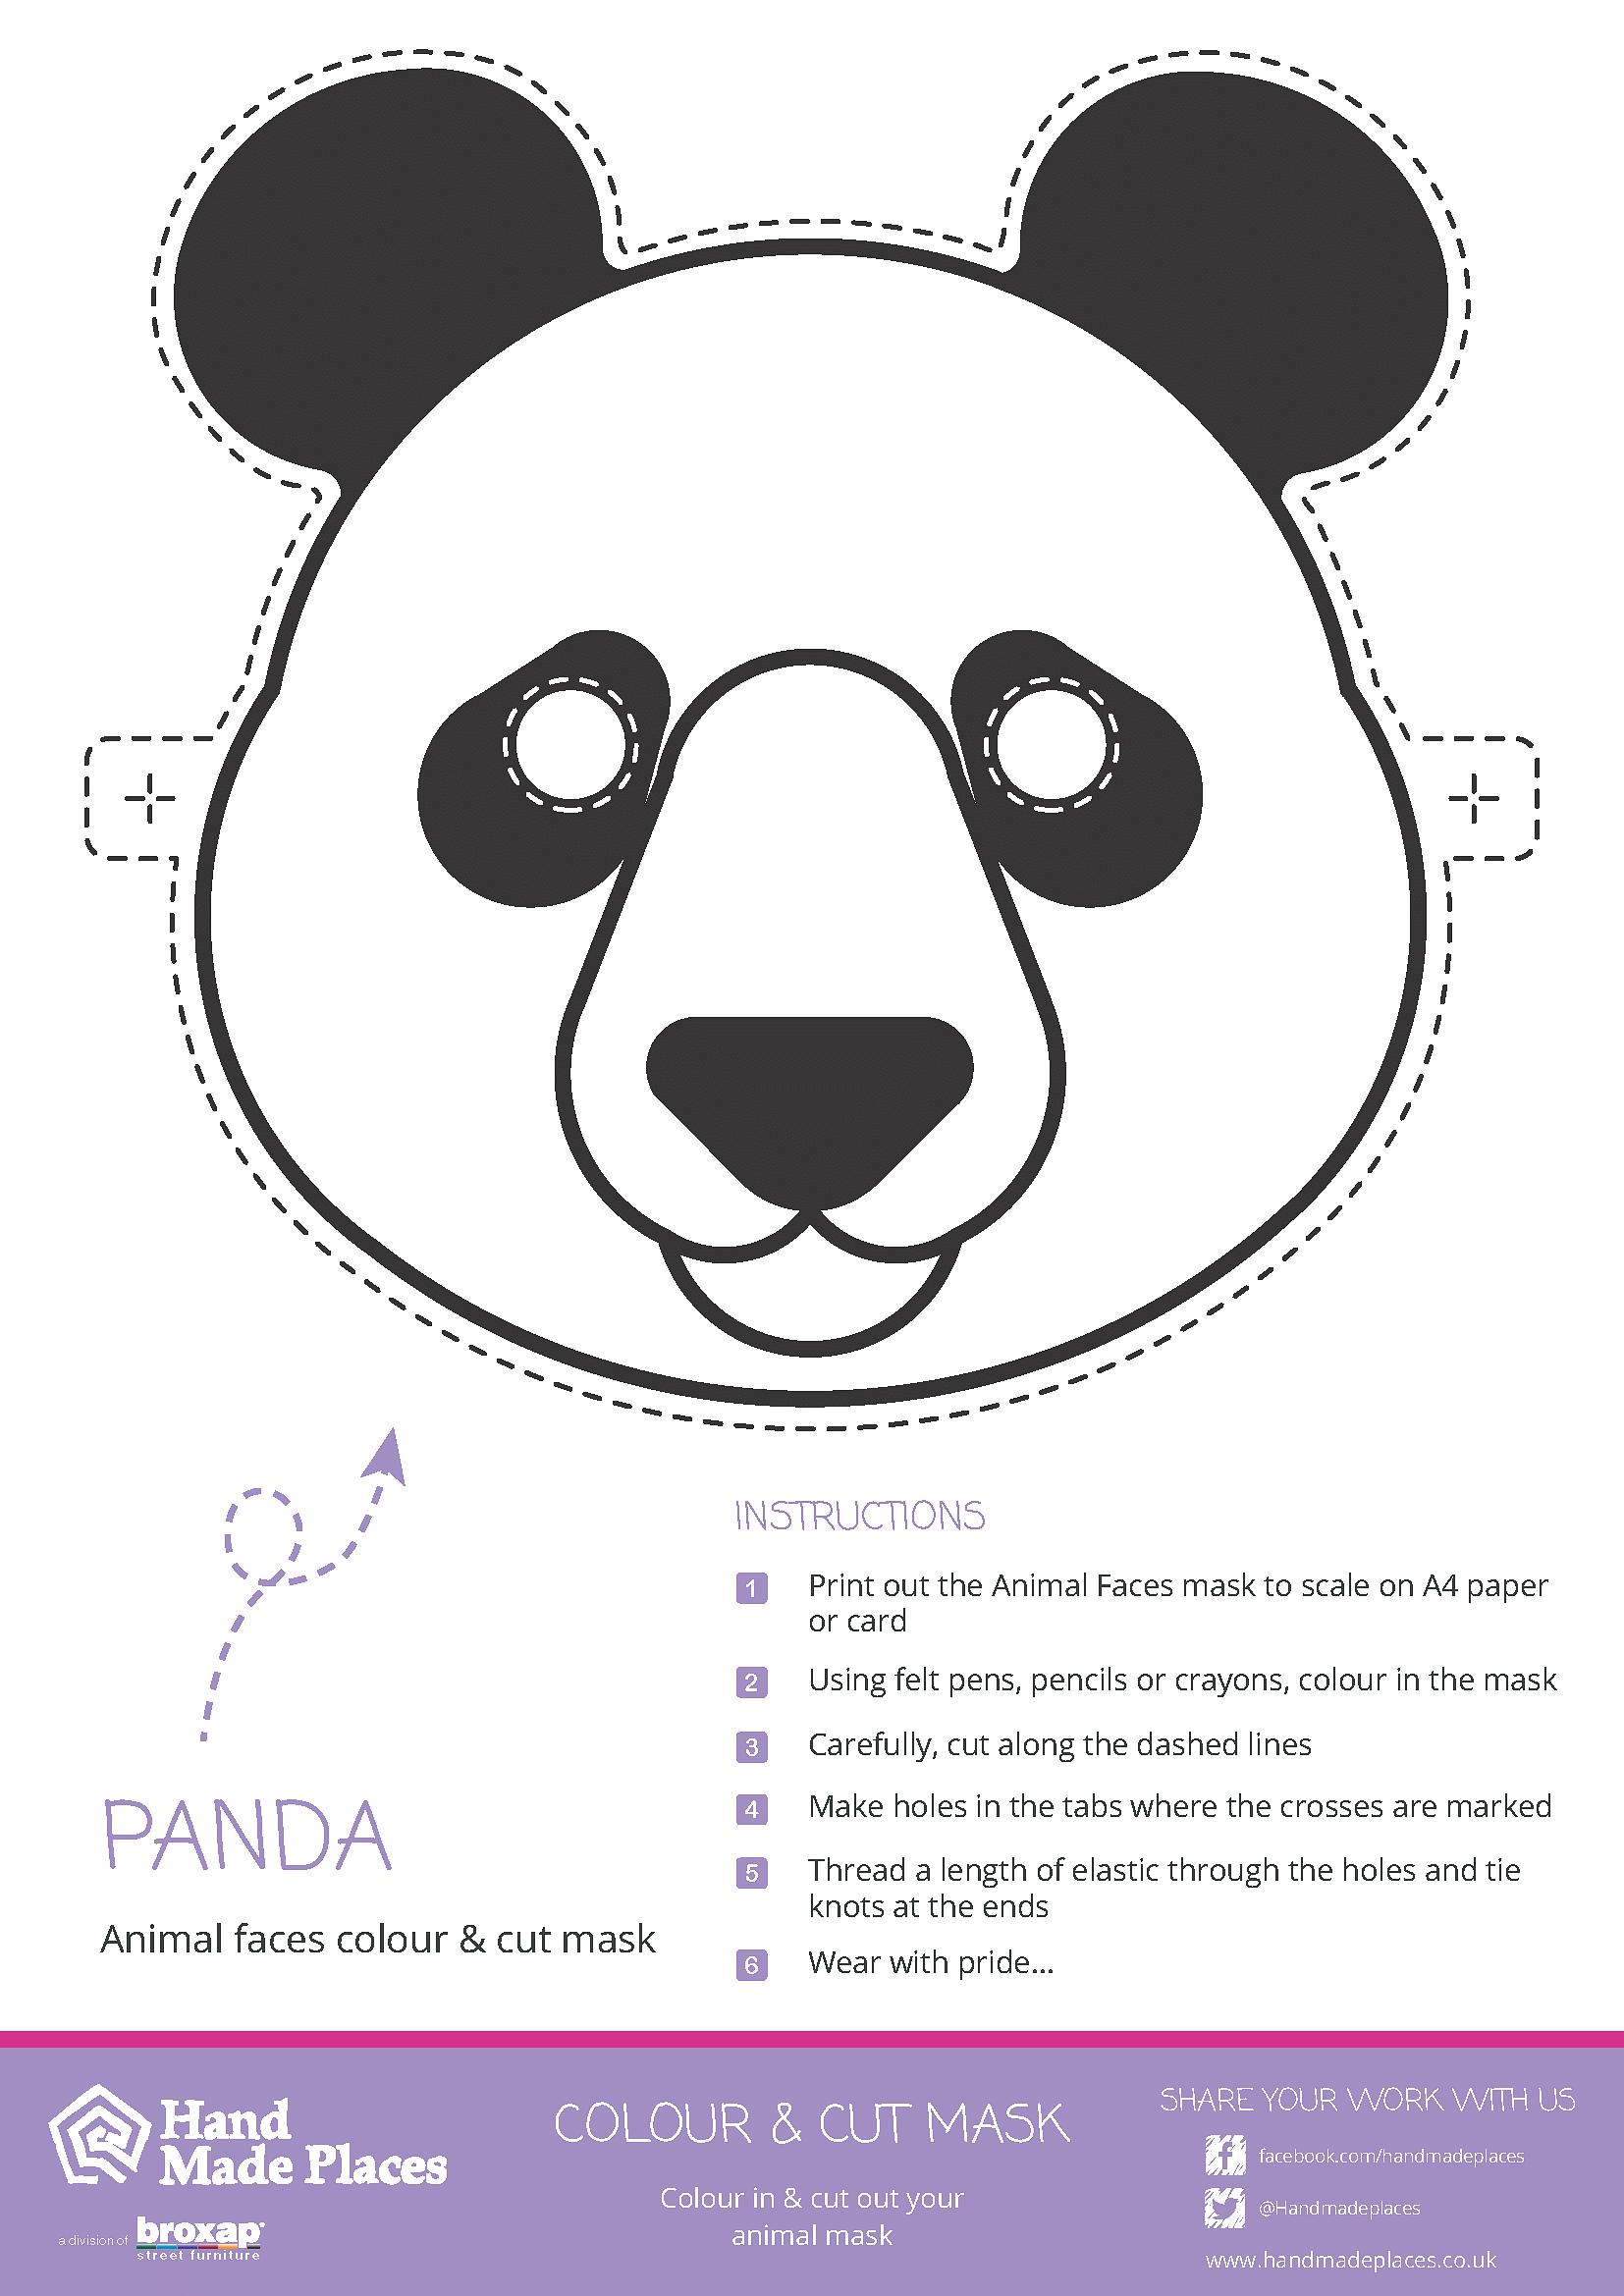 Panda Mask Colour and Cut